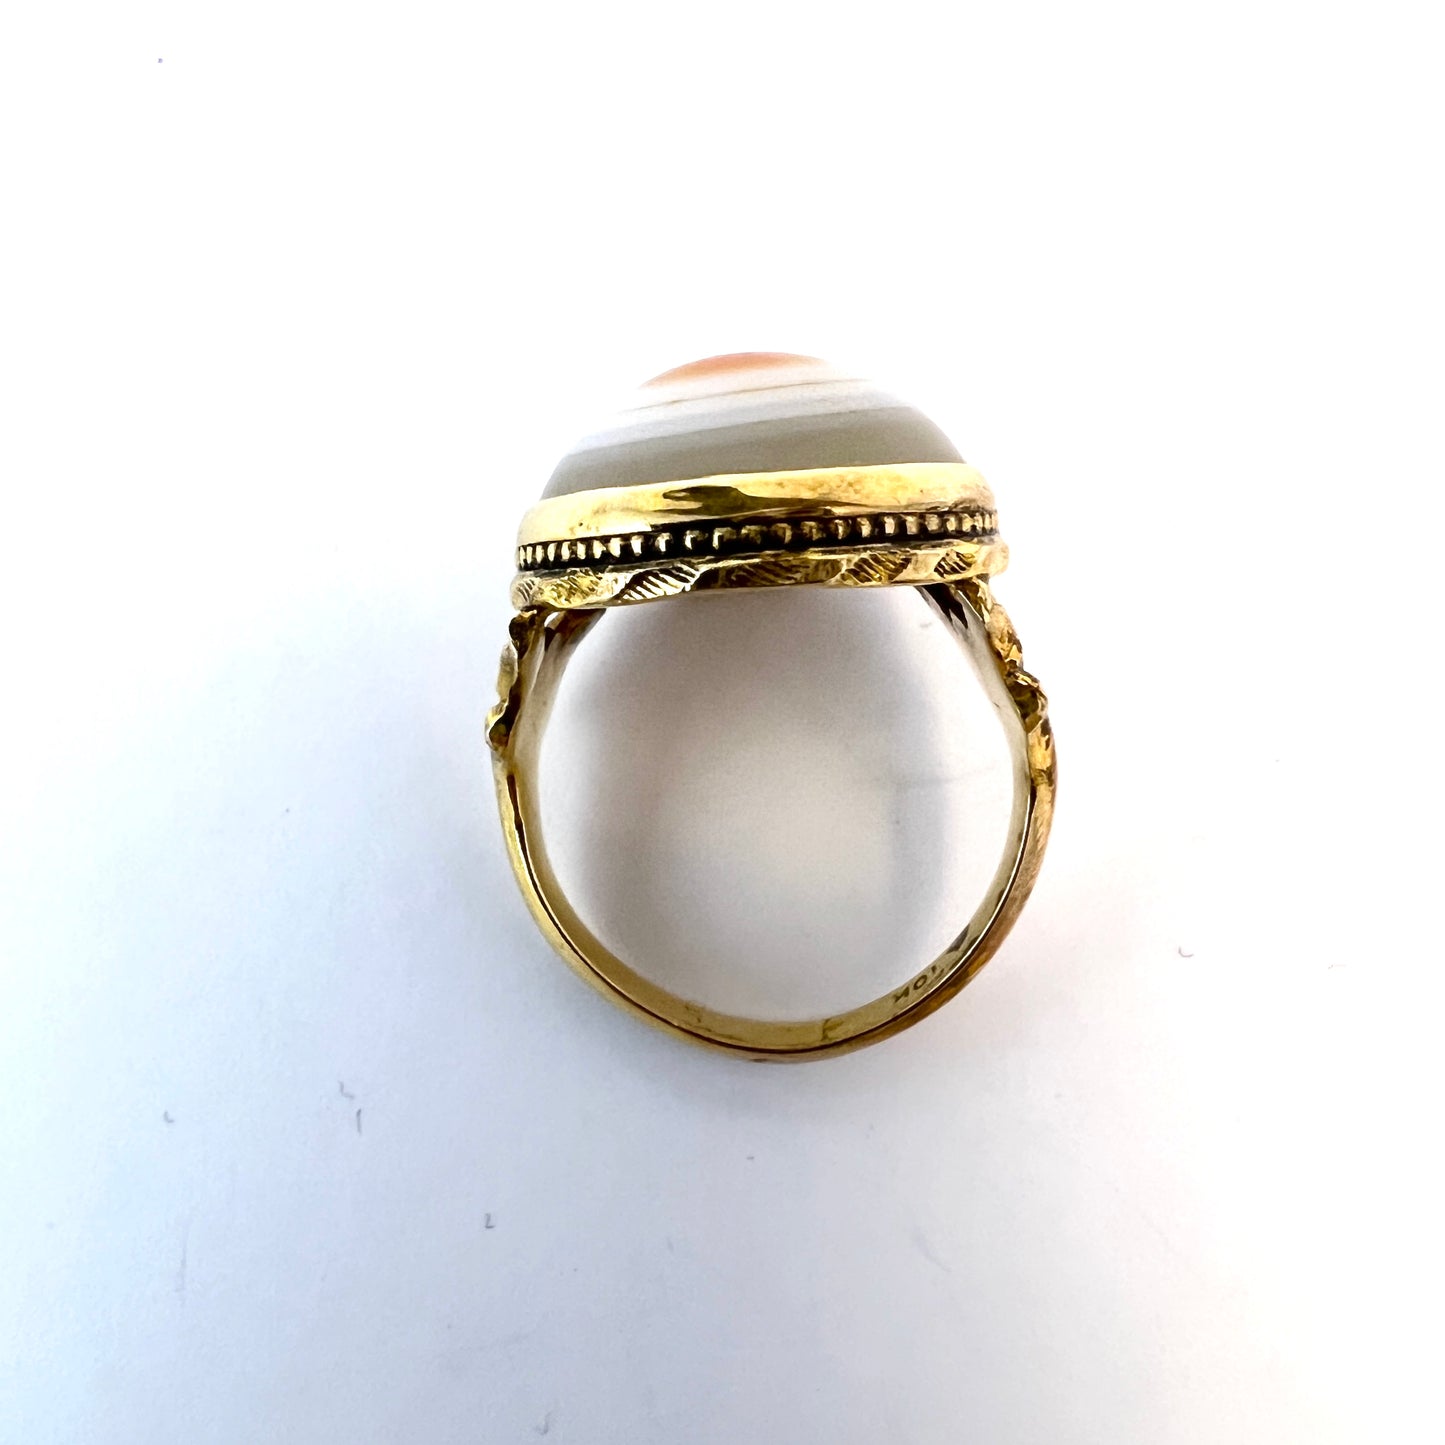 Antique 10k Gold Evil Eye Agate Ring. c 1900.